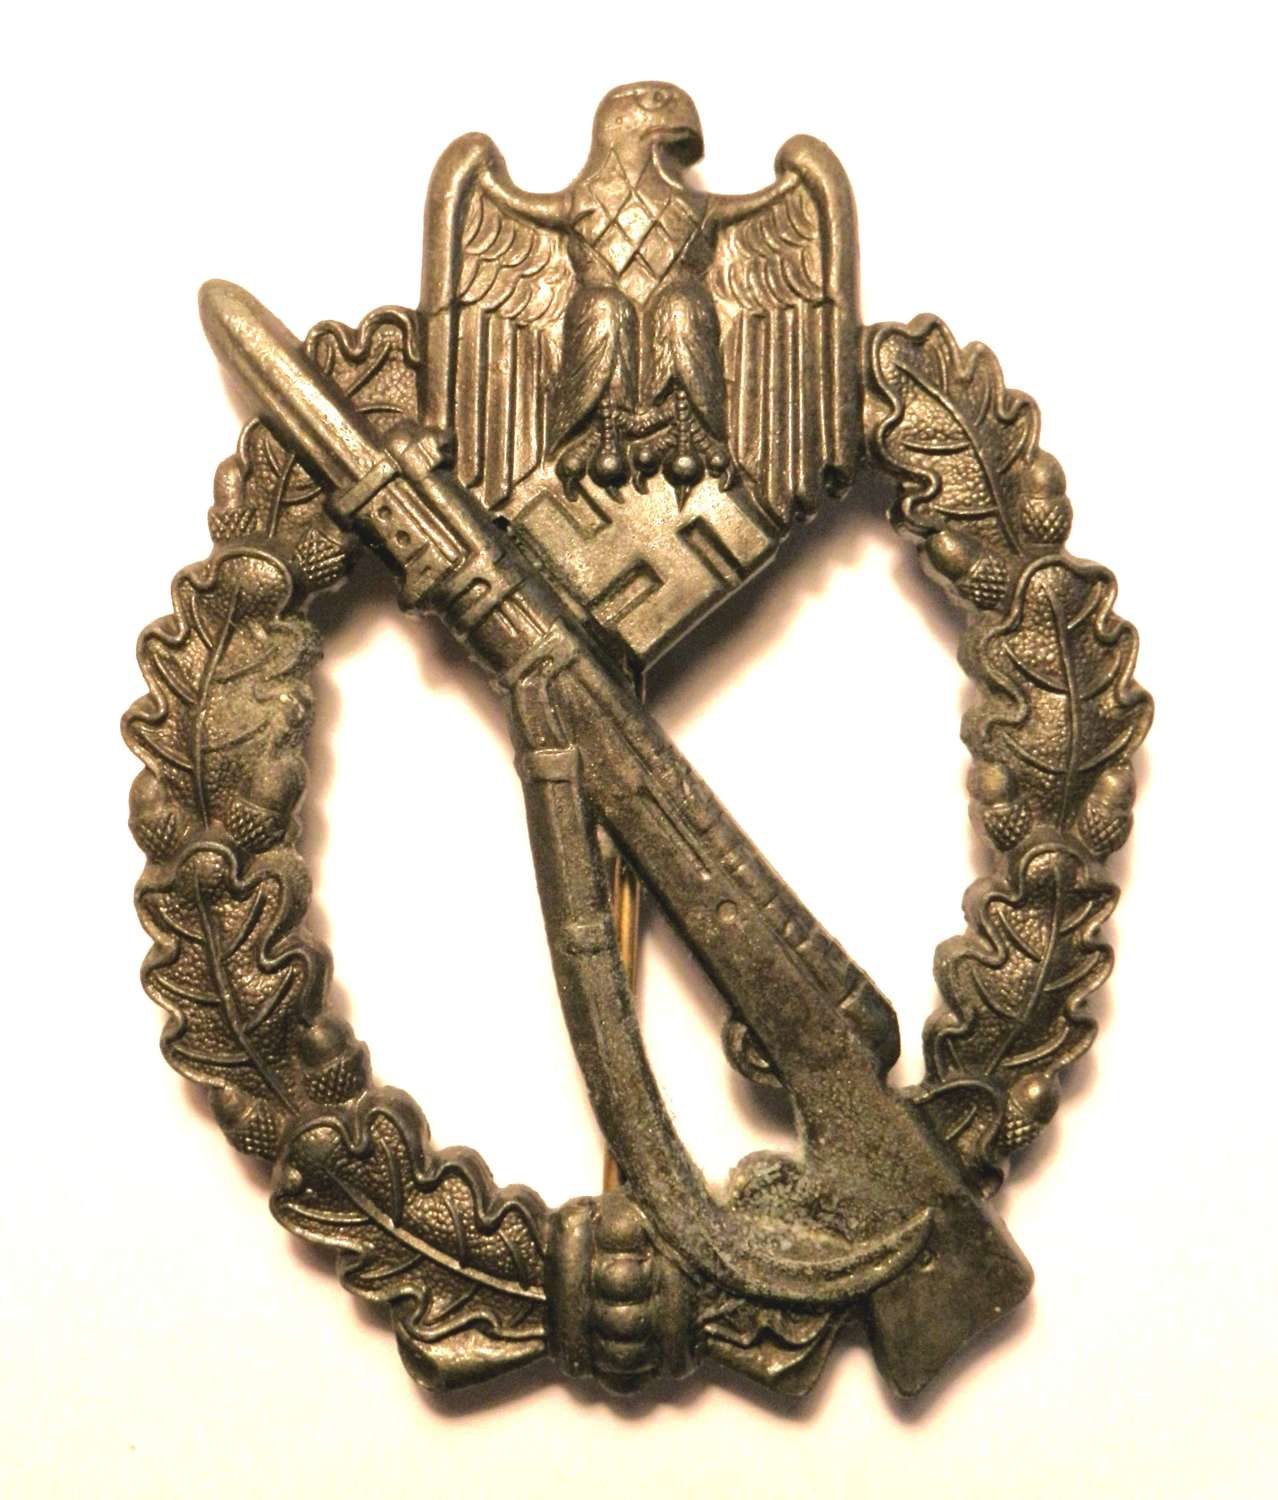 German Infantry Assault Badge. By ‘RSS’ 'Richard Sieper u. Söhne'